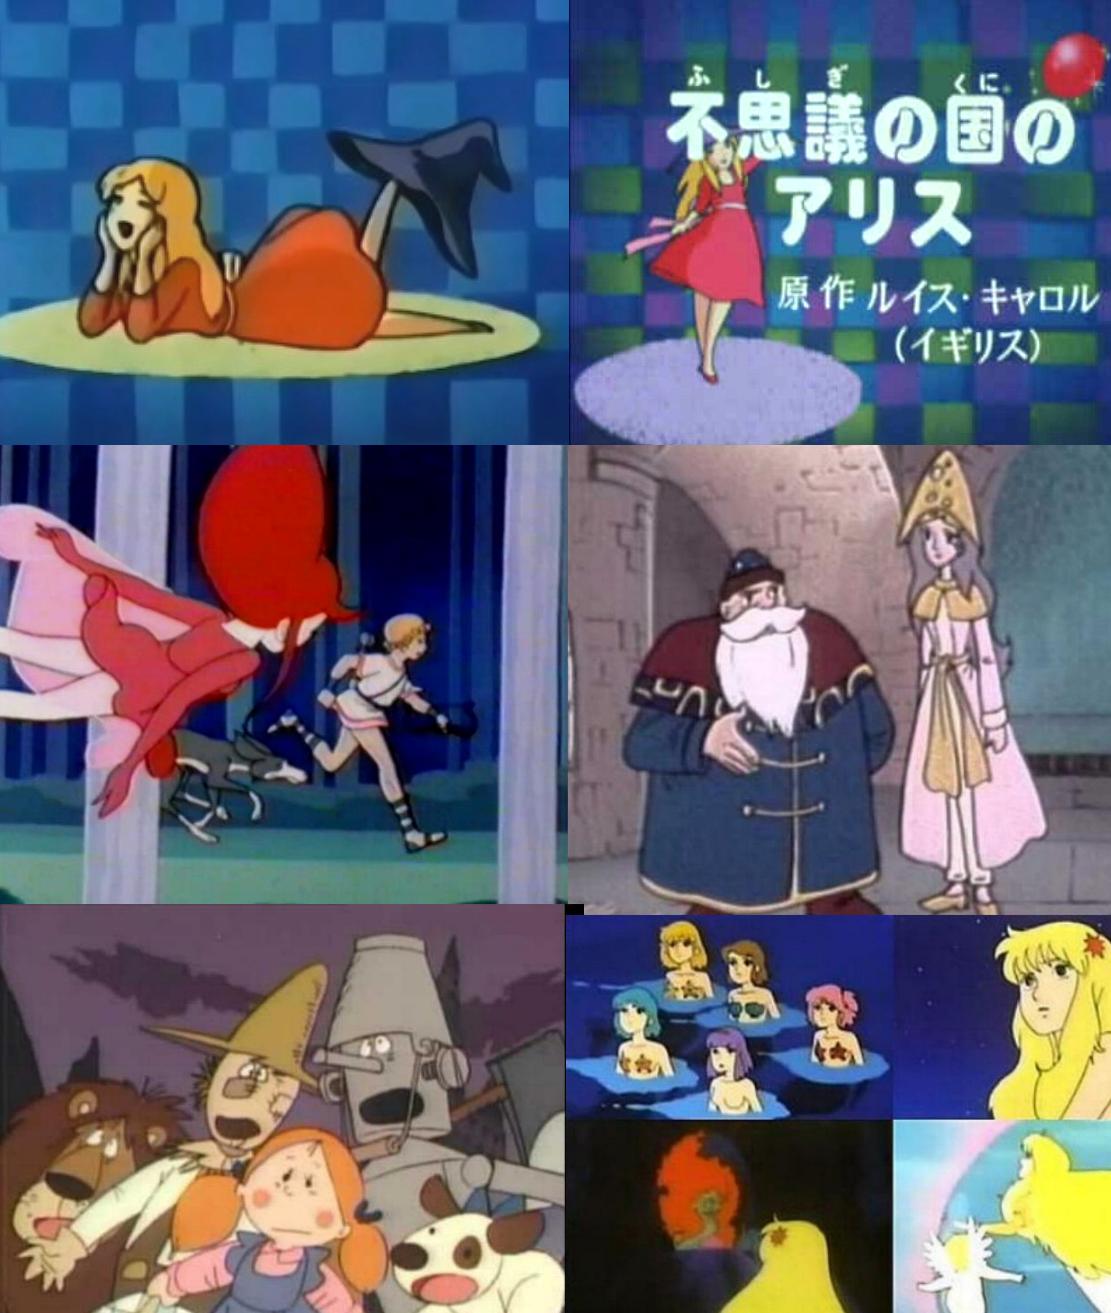 Le Serie Animate Giapponesi In Italia I Primi Anime In Tv 1975 1980 Anni 60 70 80 E Dintorni